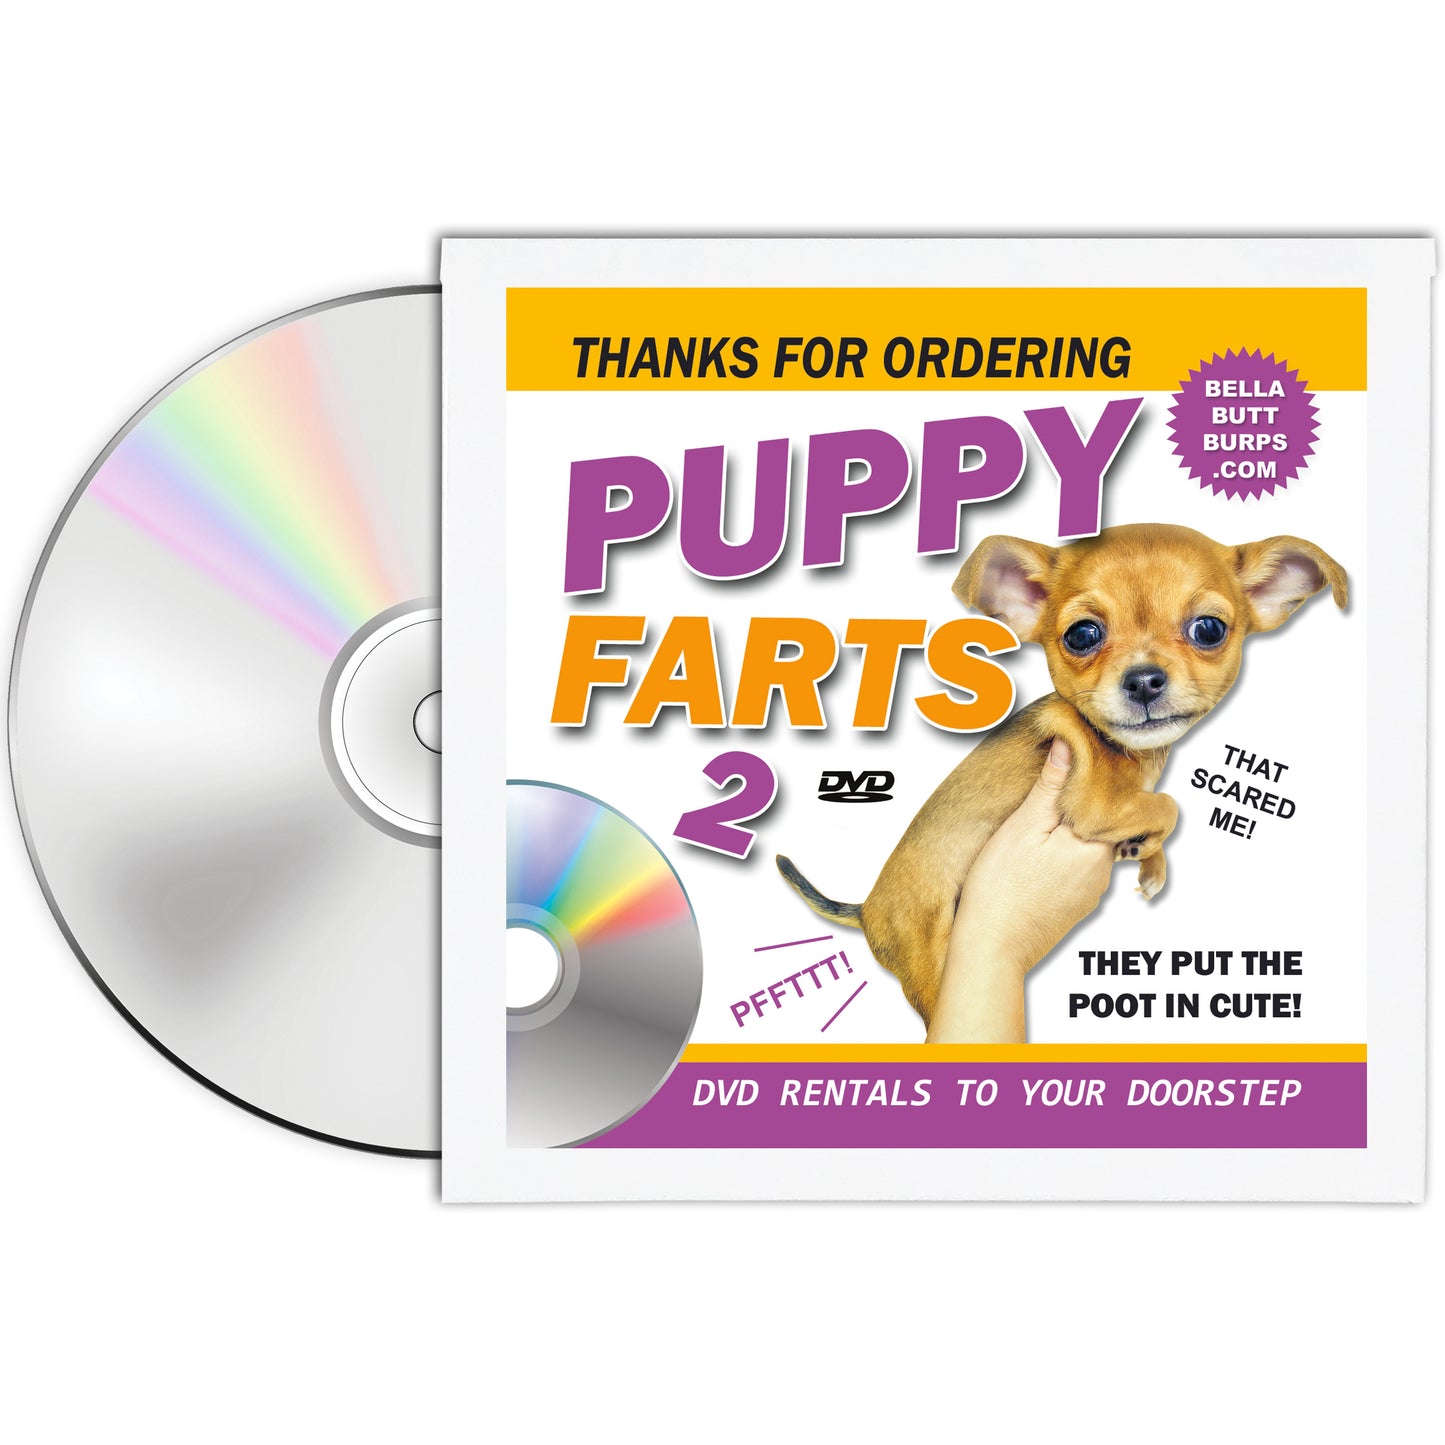 Puppy Farts 2 Prank DVD Gag